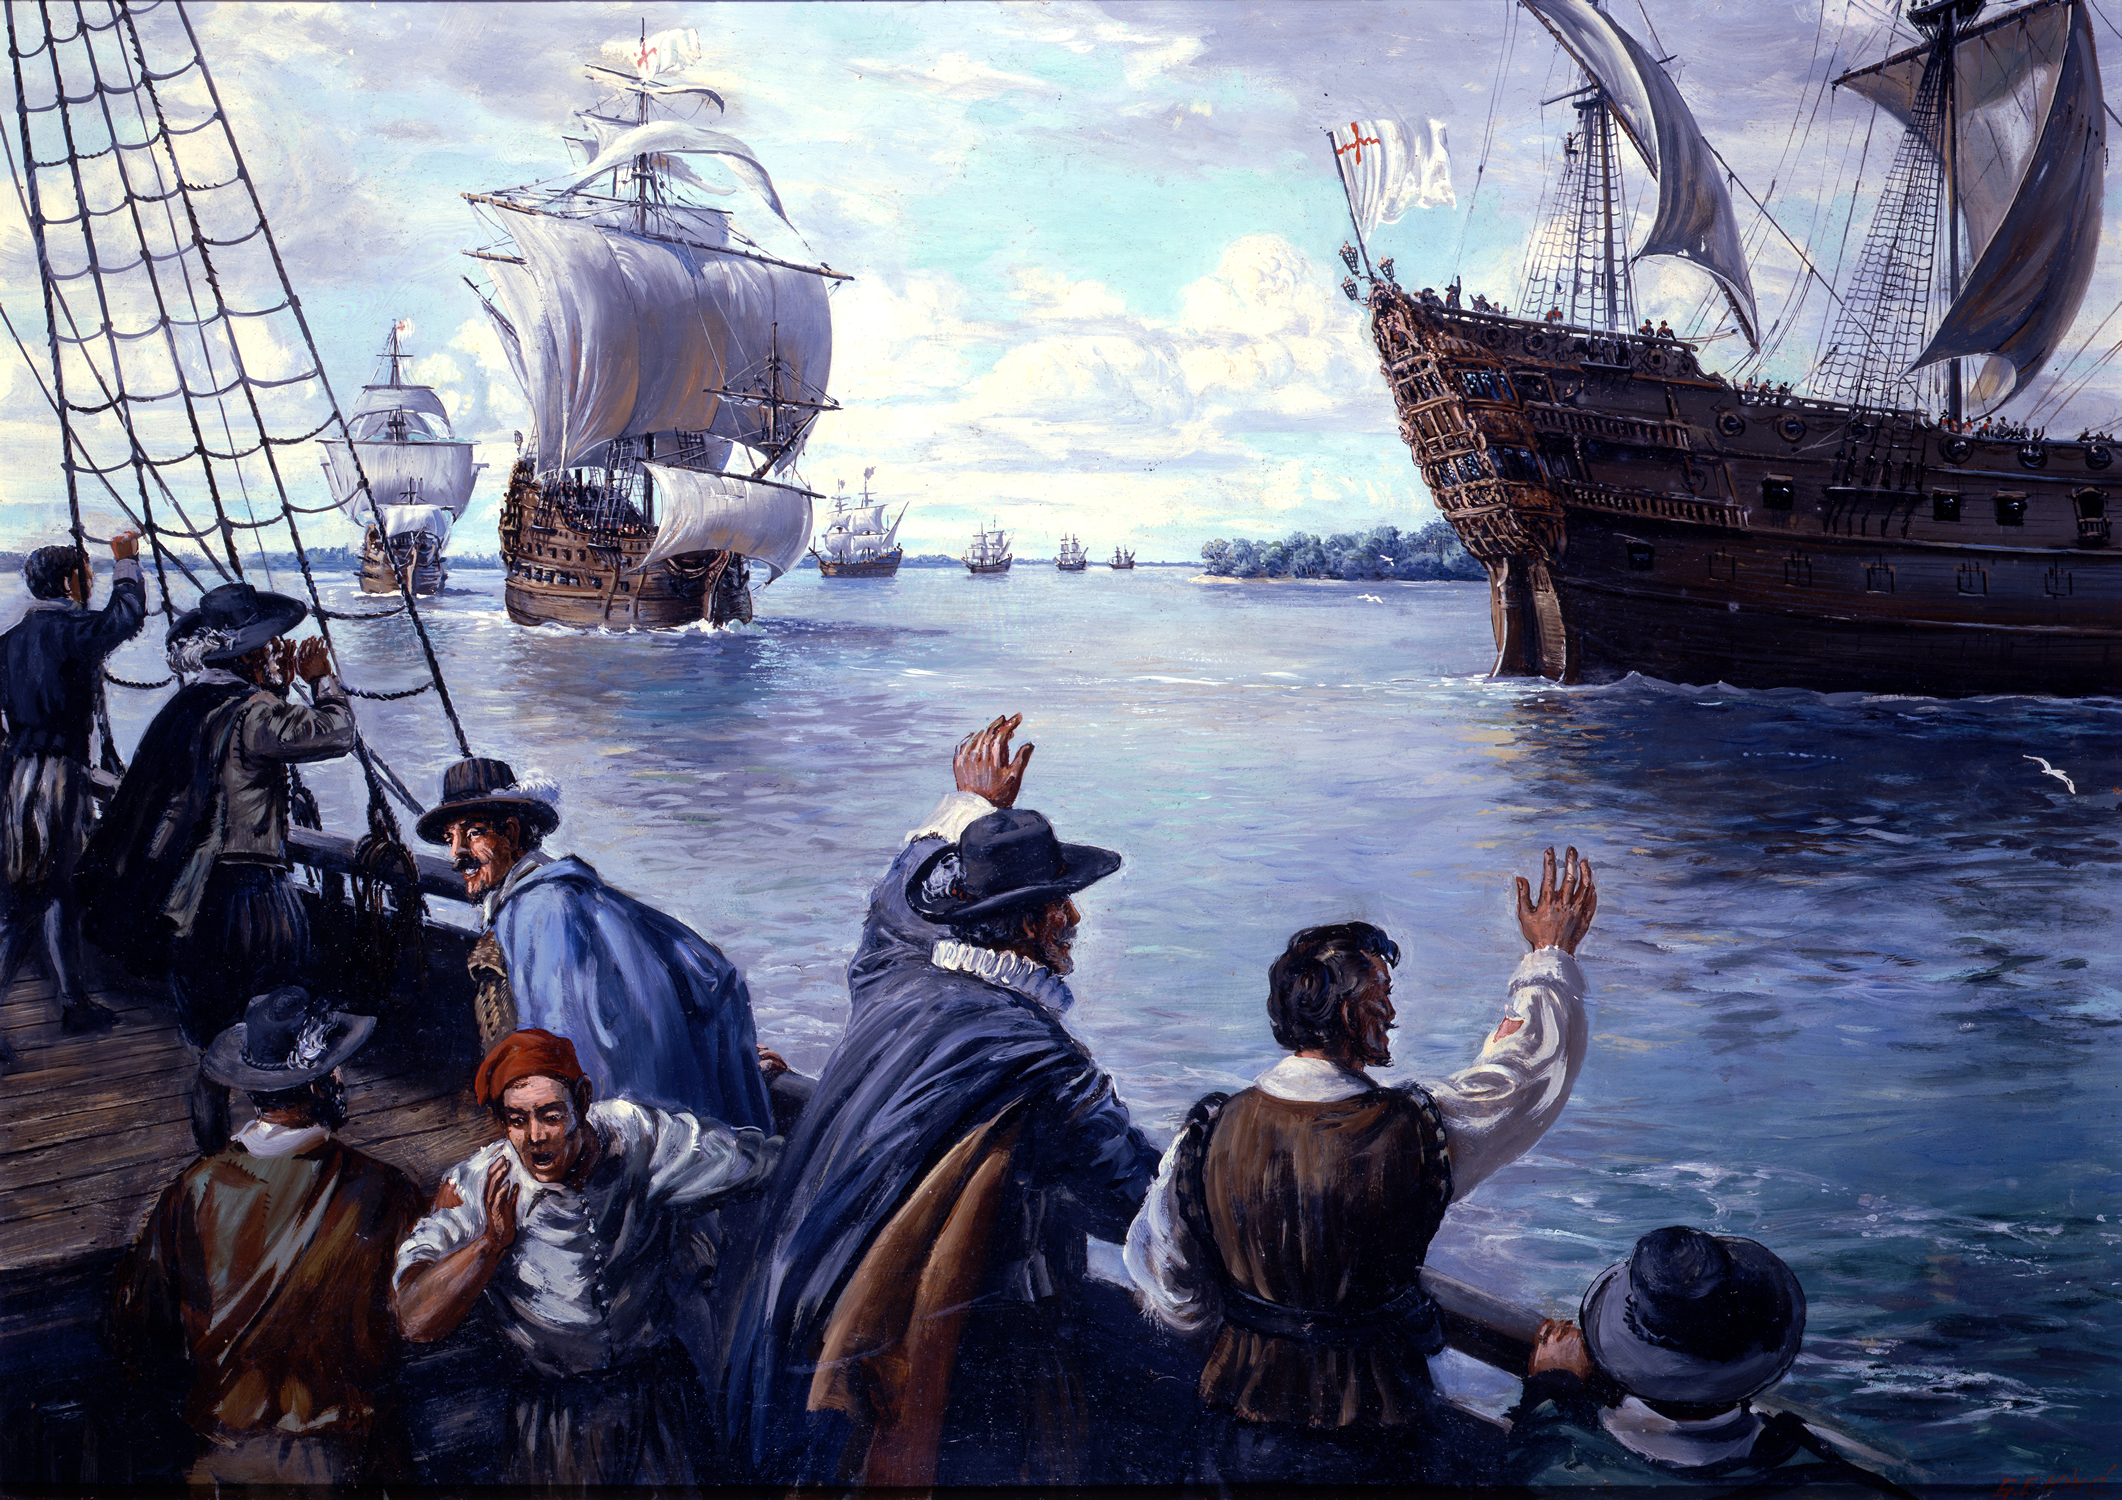 The ship arrived. Колонисты Северной Америки Мэйфлауэр. Колонизация Америки англичанами (1607—1775). Америка 17 век. Колонисты Северной Америки 17 век.